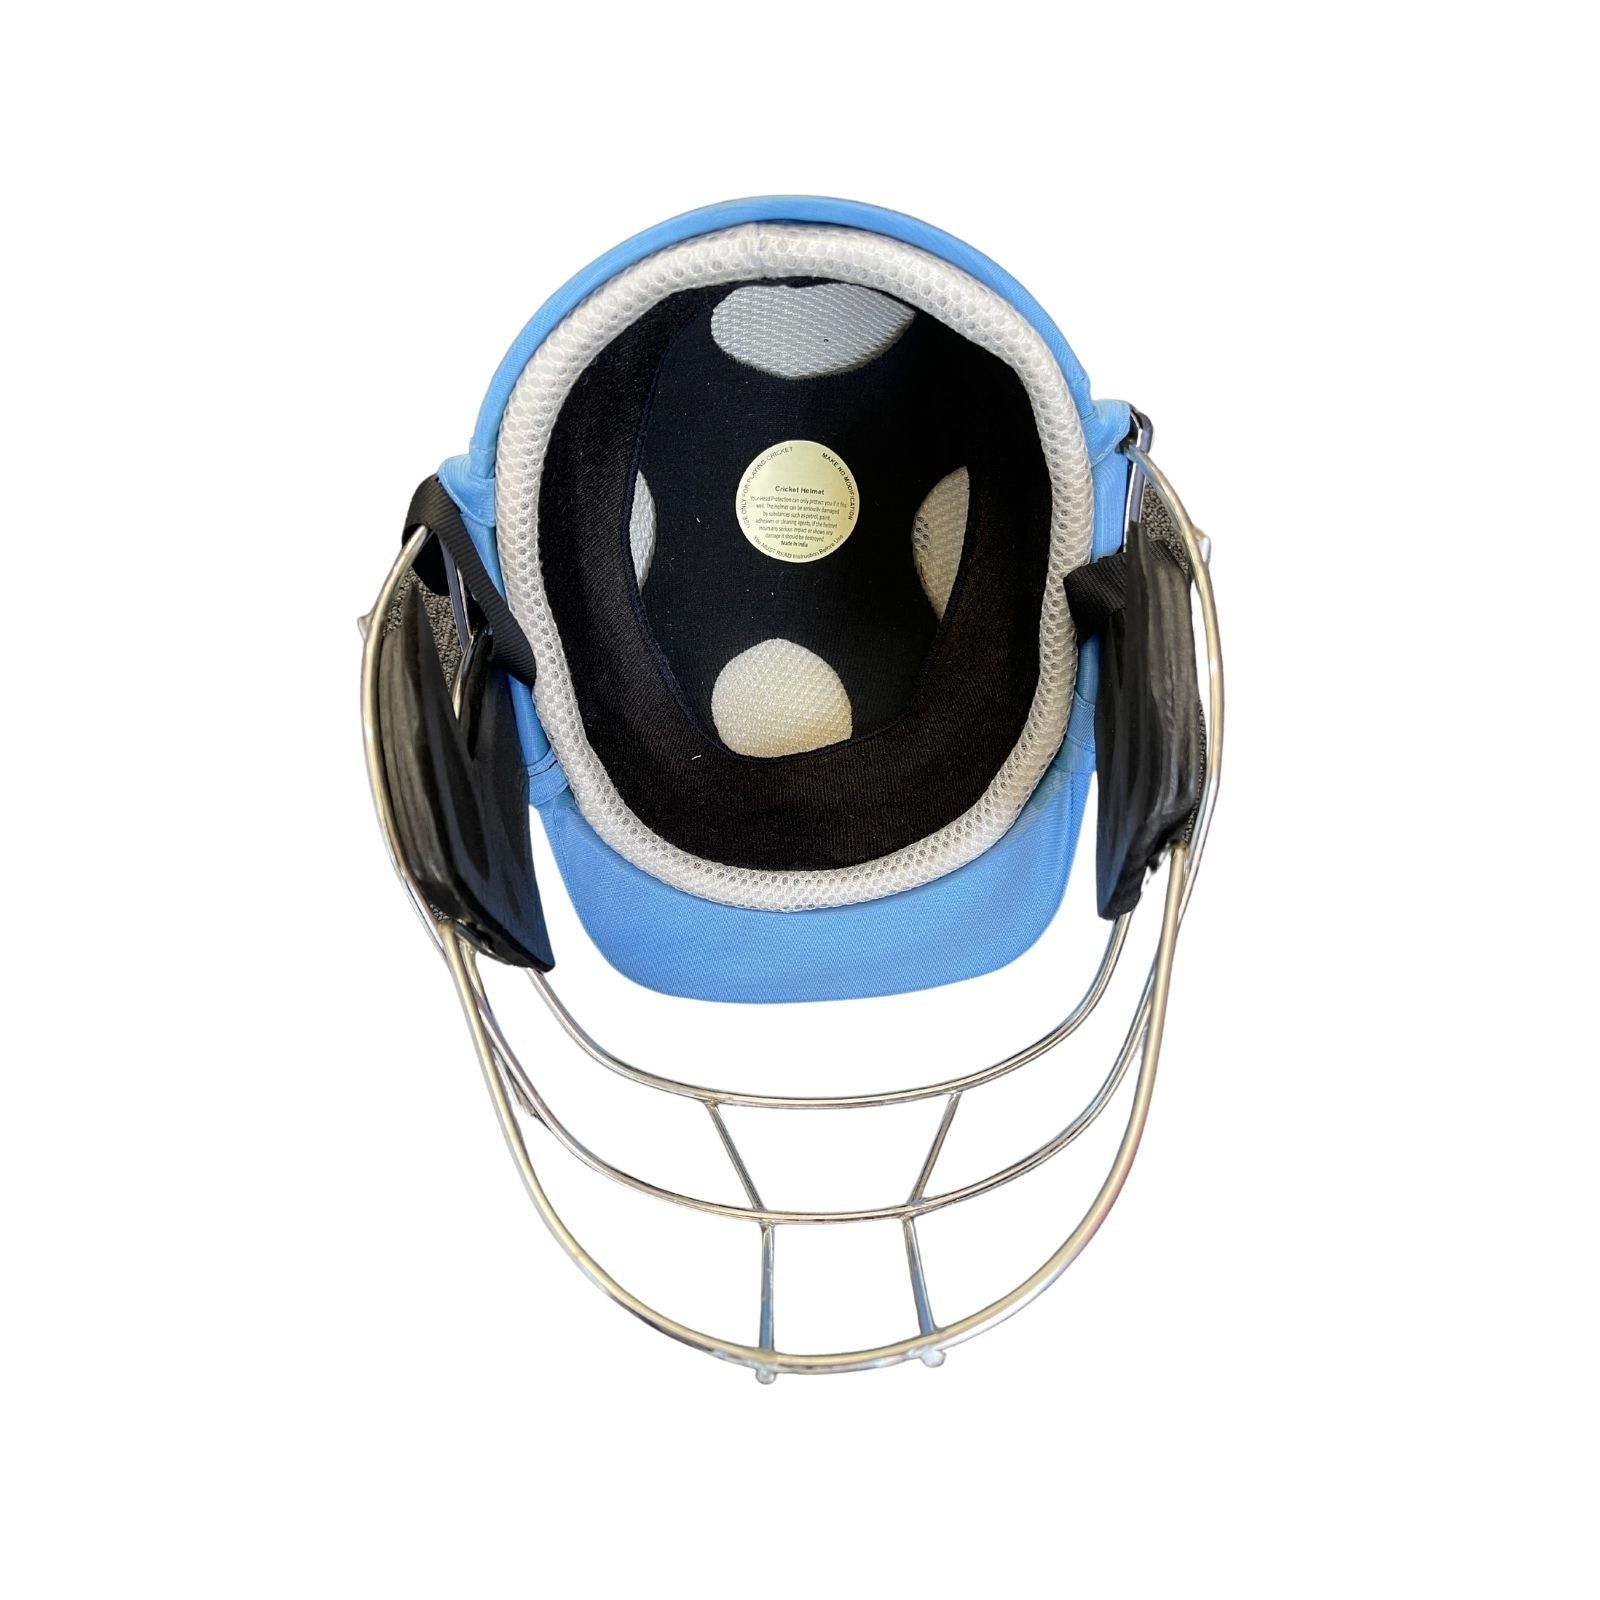 Sturdy Cheetah Sky Blue Steel Cricket Helmet - Senior